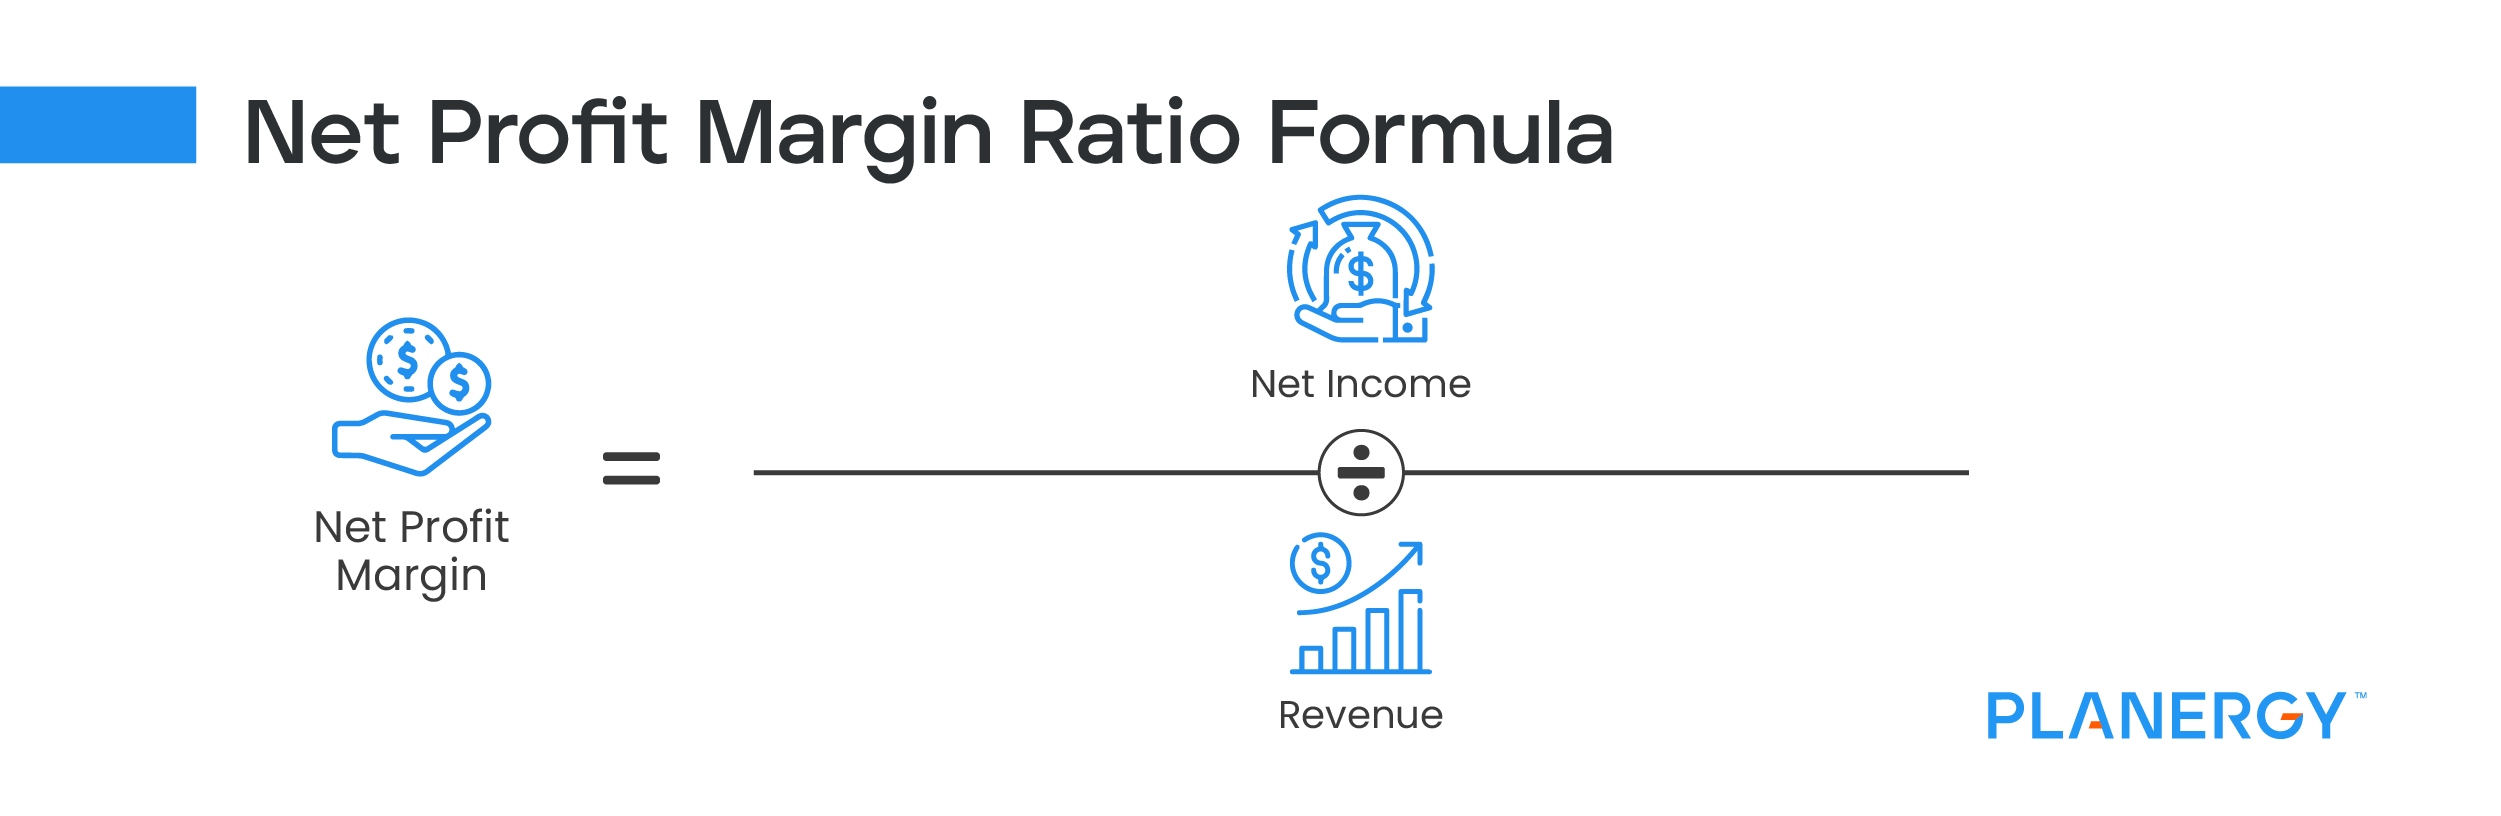 Net Profit Margin Ratio Formula